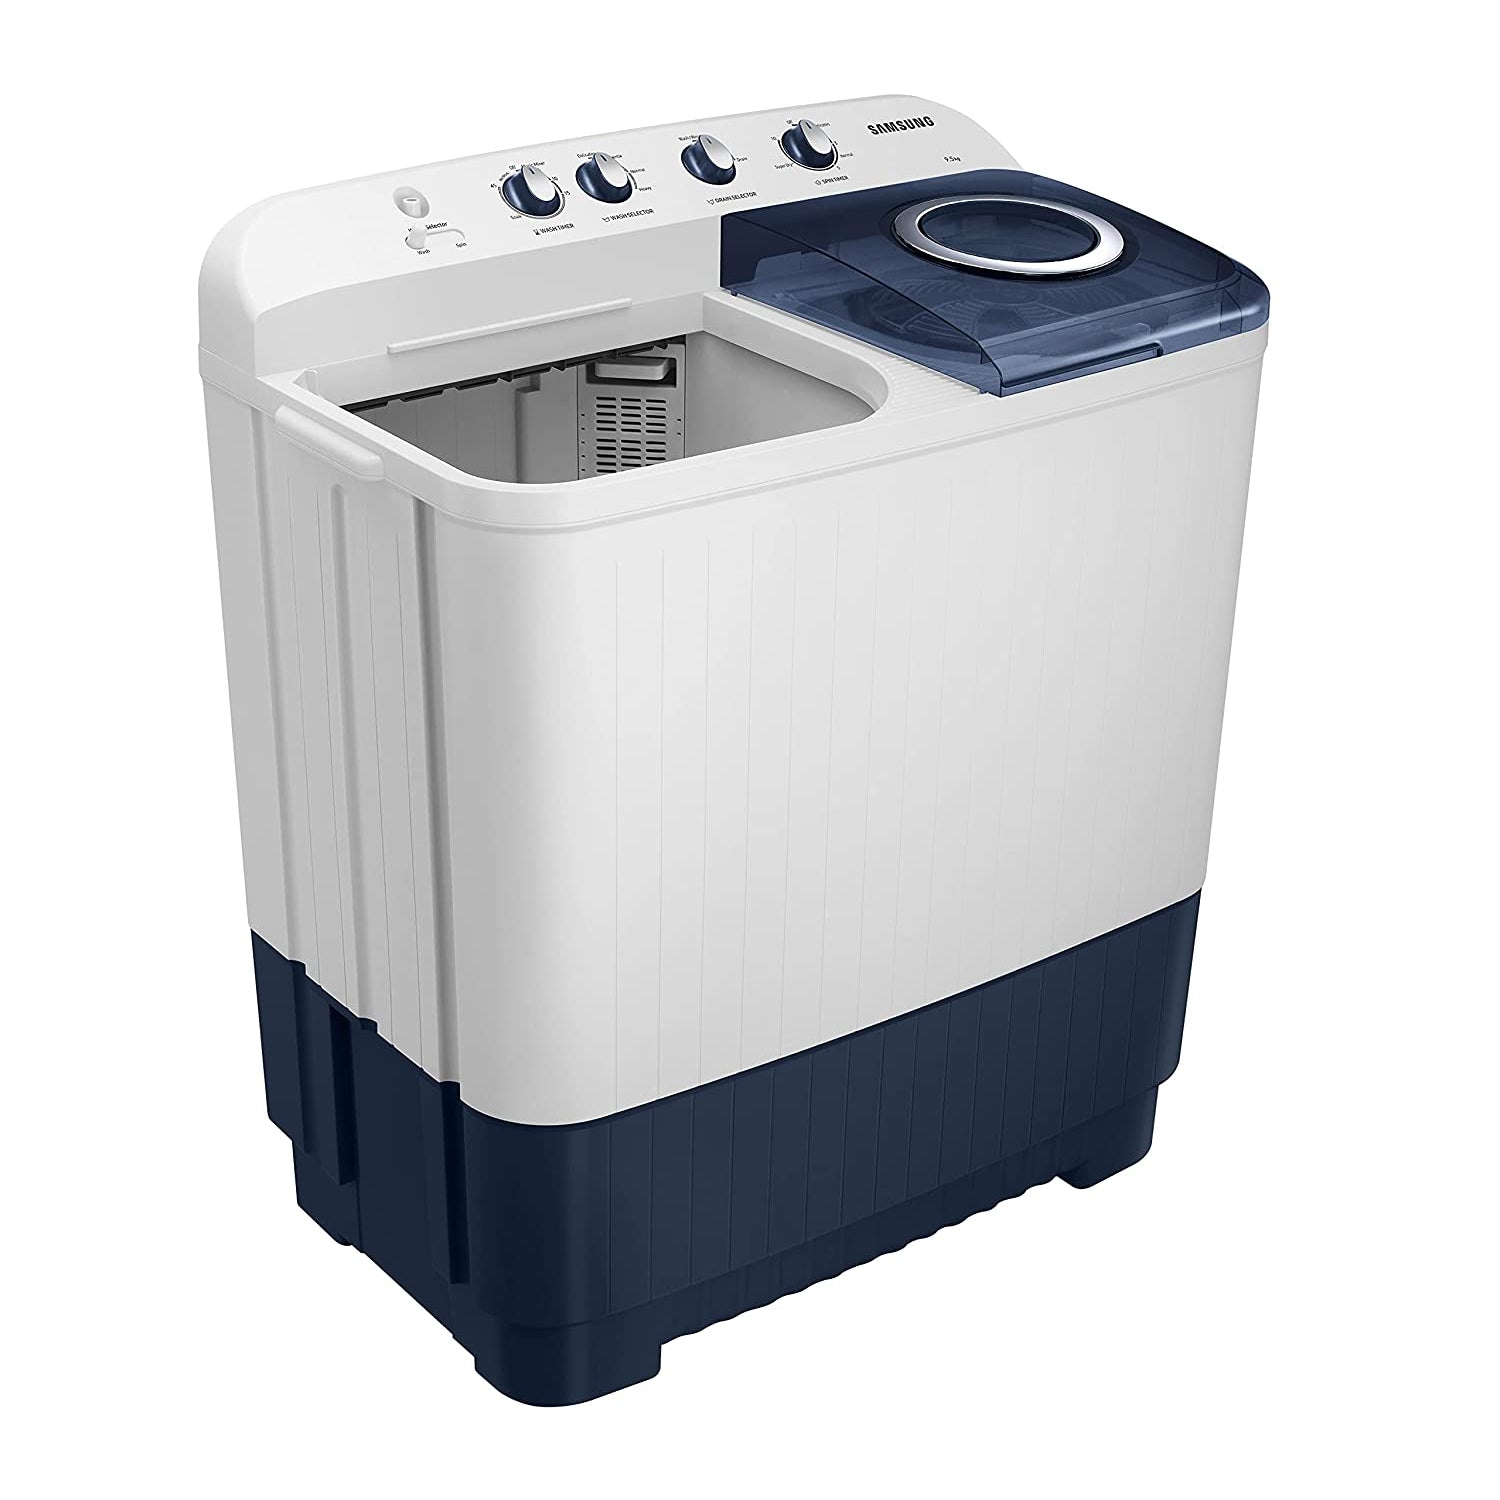 Samsung WT95A4200LL 9.5kg Semi Automatic Top Loading Washing Machine